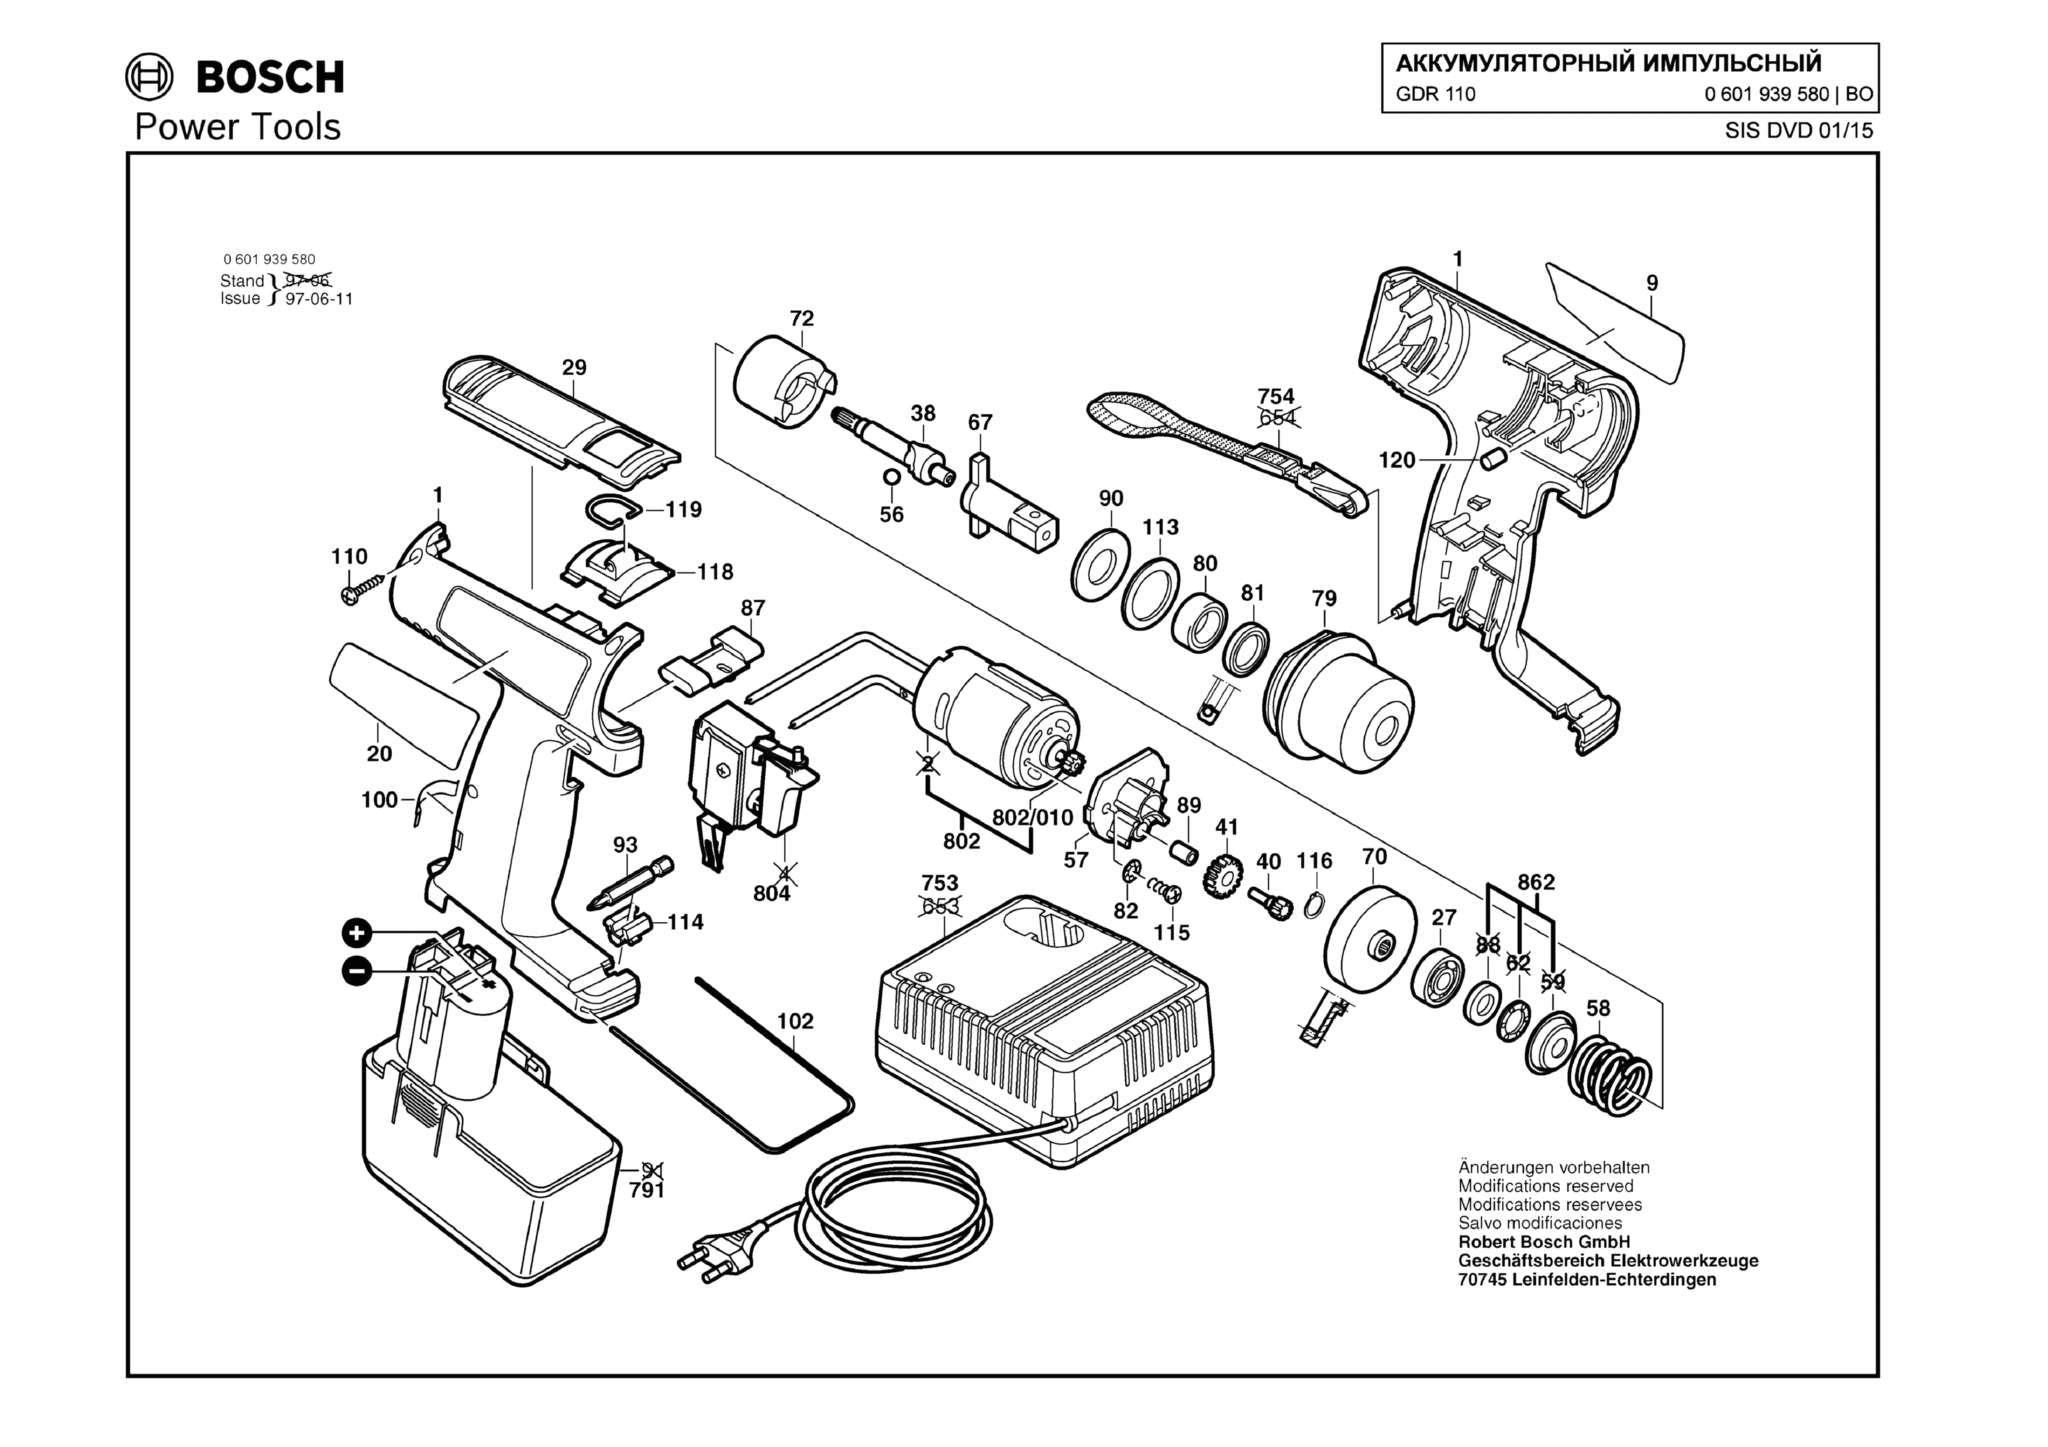 Запчасти, схема и деталировка Bosch GDR 110 (ТИП 0601939580)